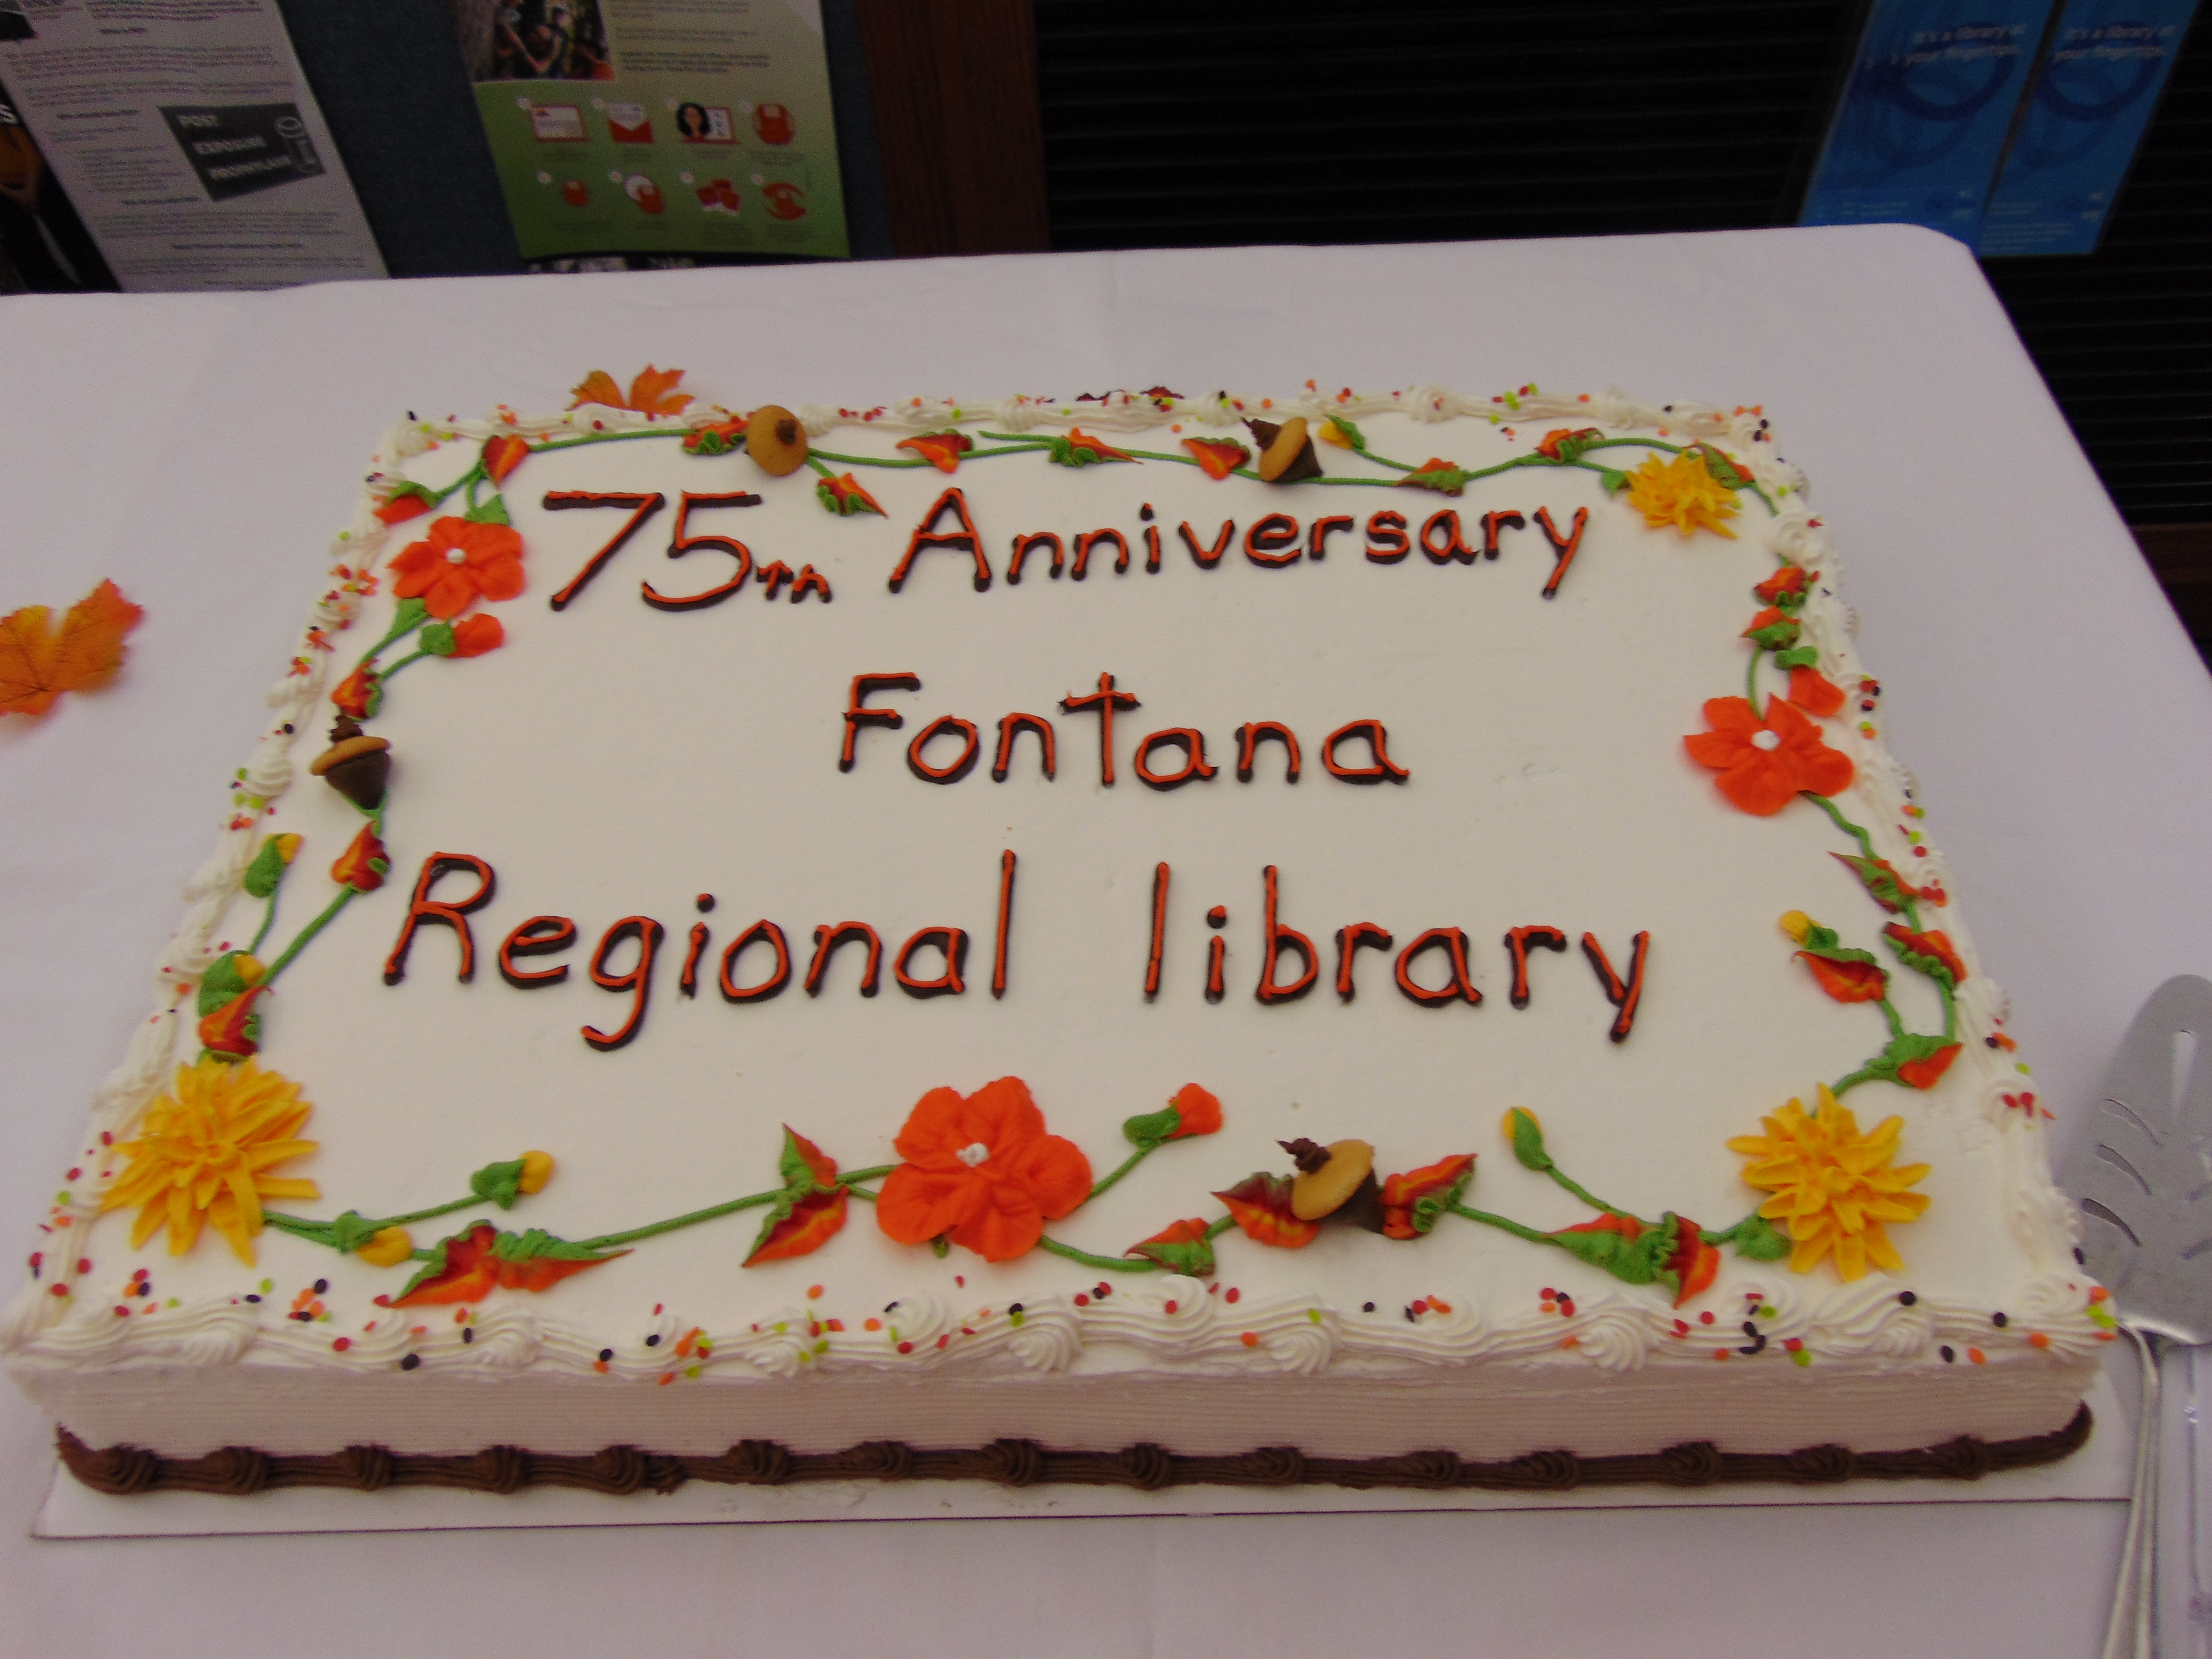 Fontana Regional Library celebrates 75 years of service